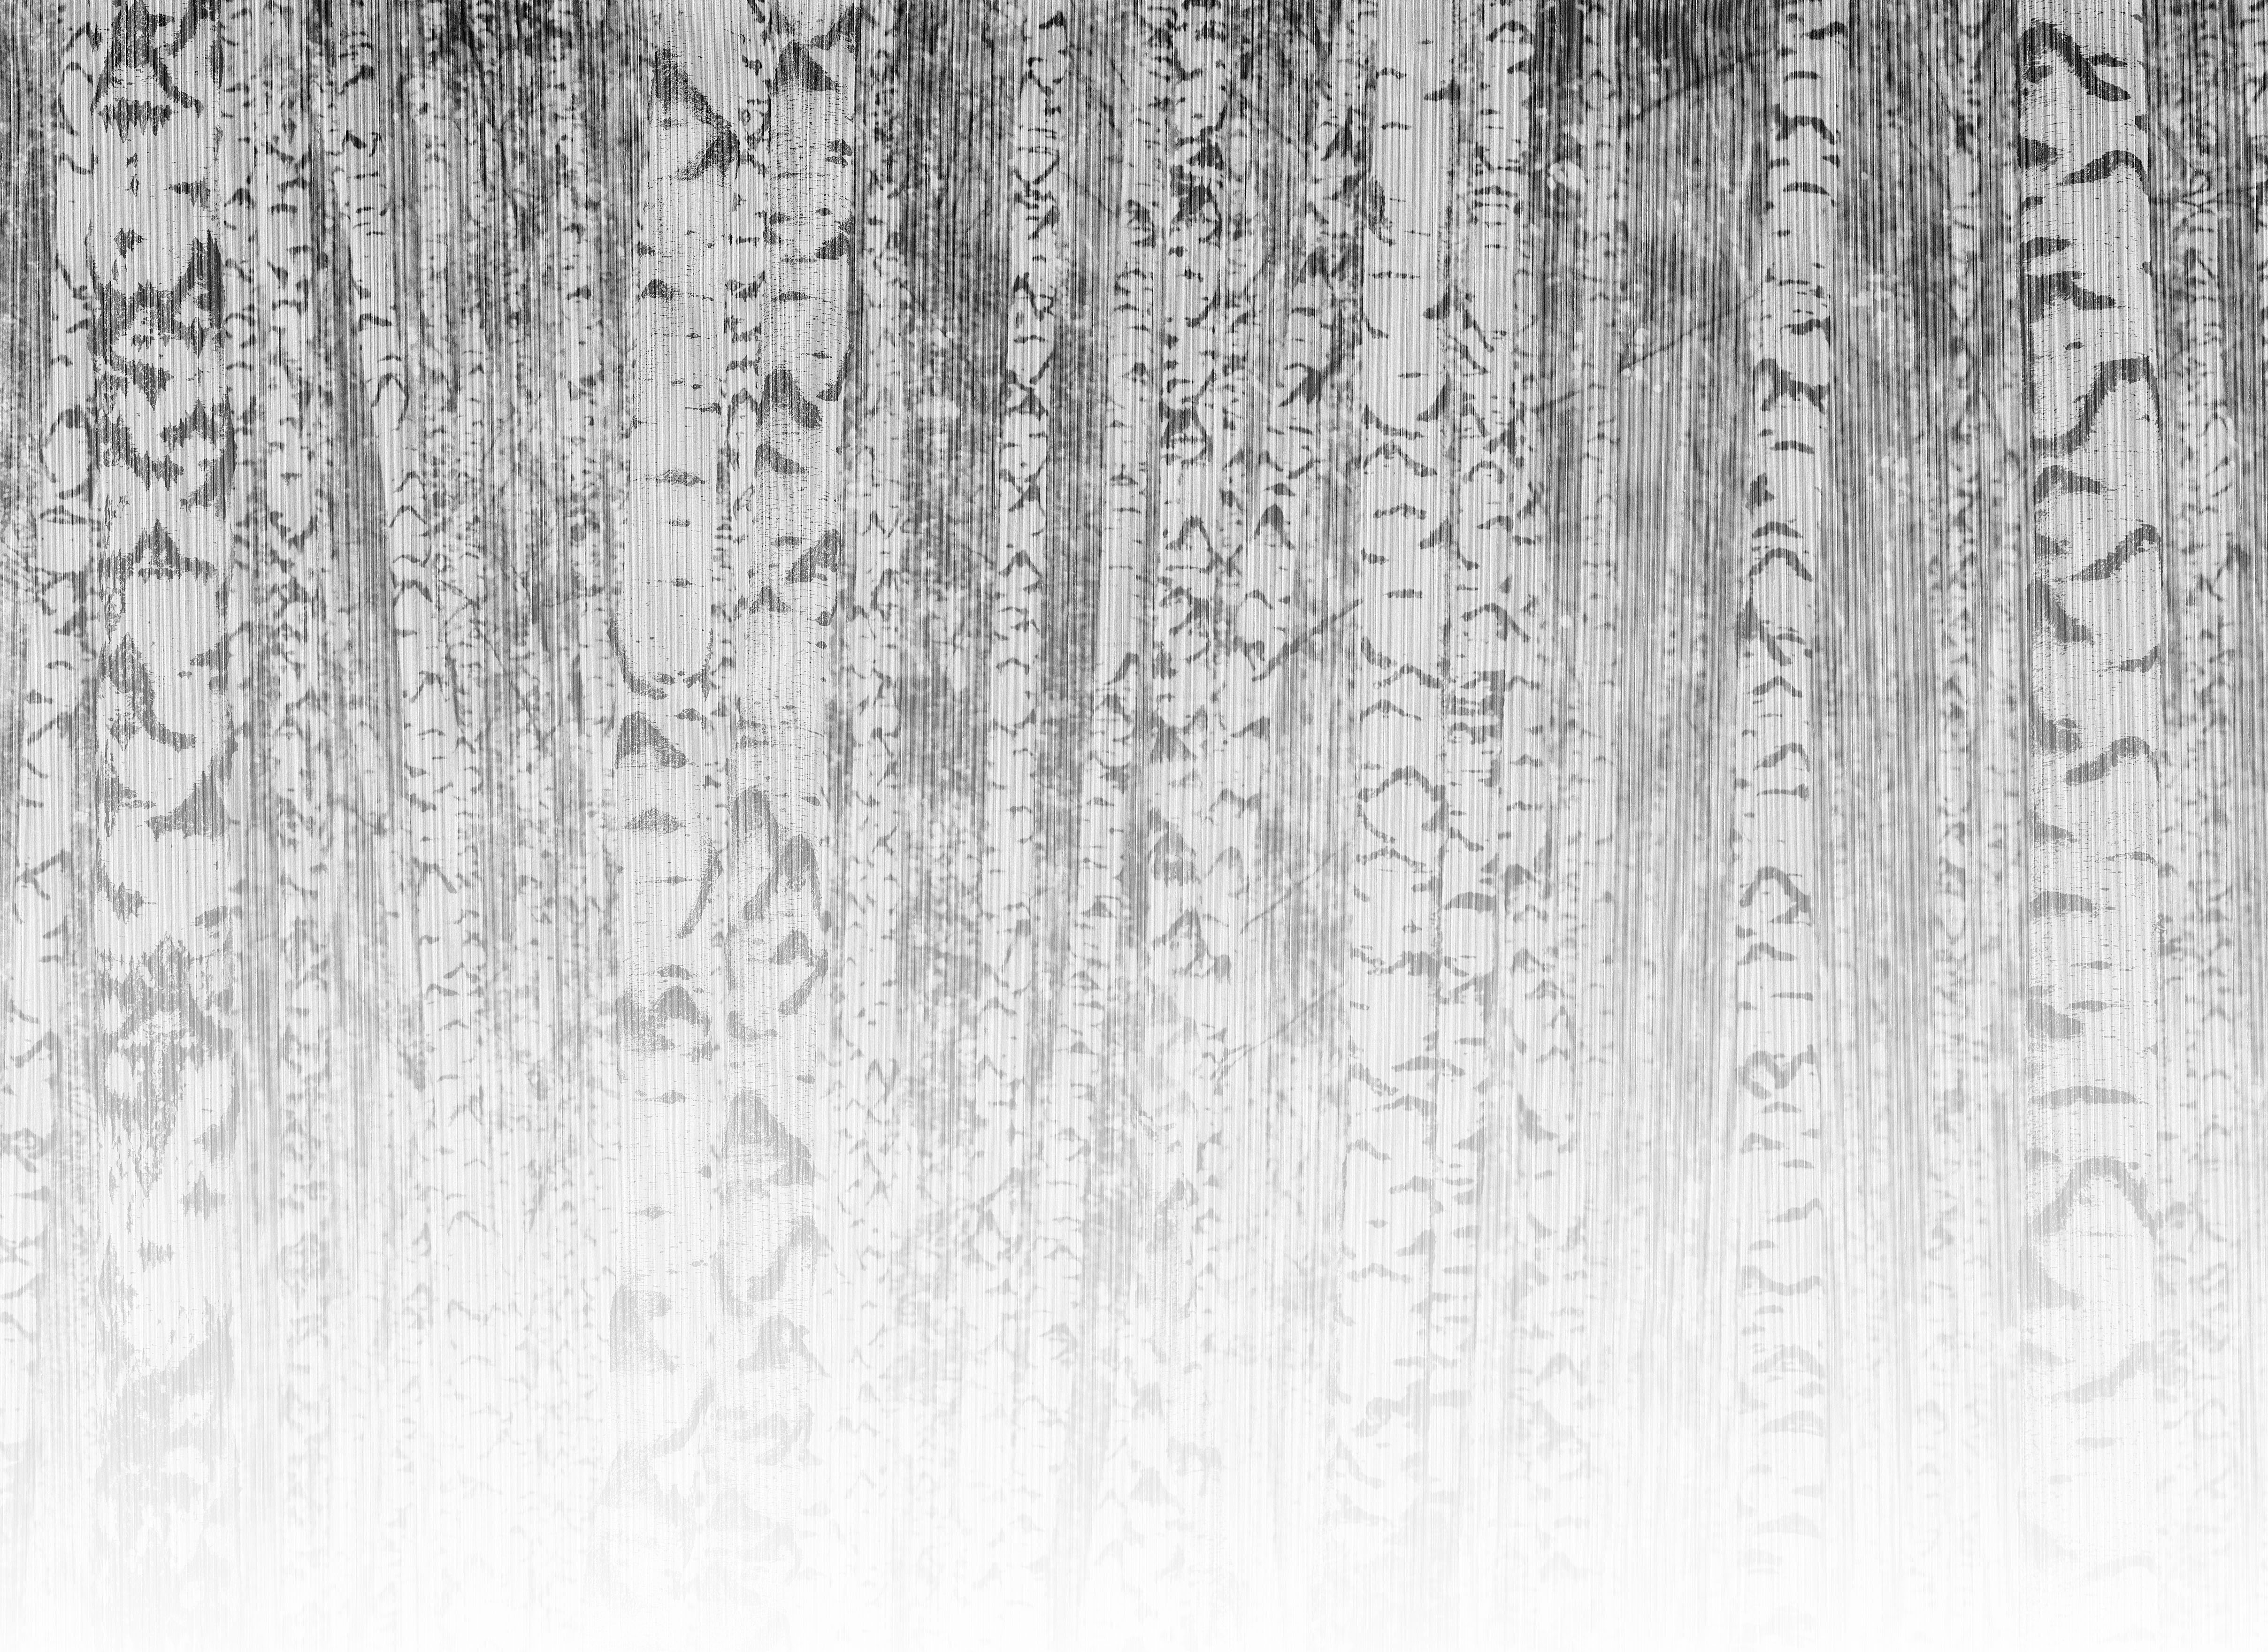 FOTOTAPETE BirchForest1 3,50 x 2,55 m (8,93 m²)